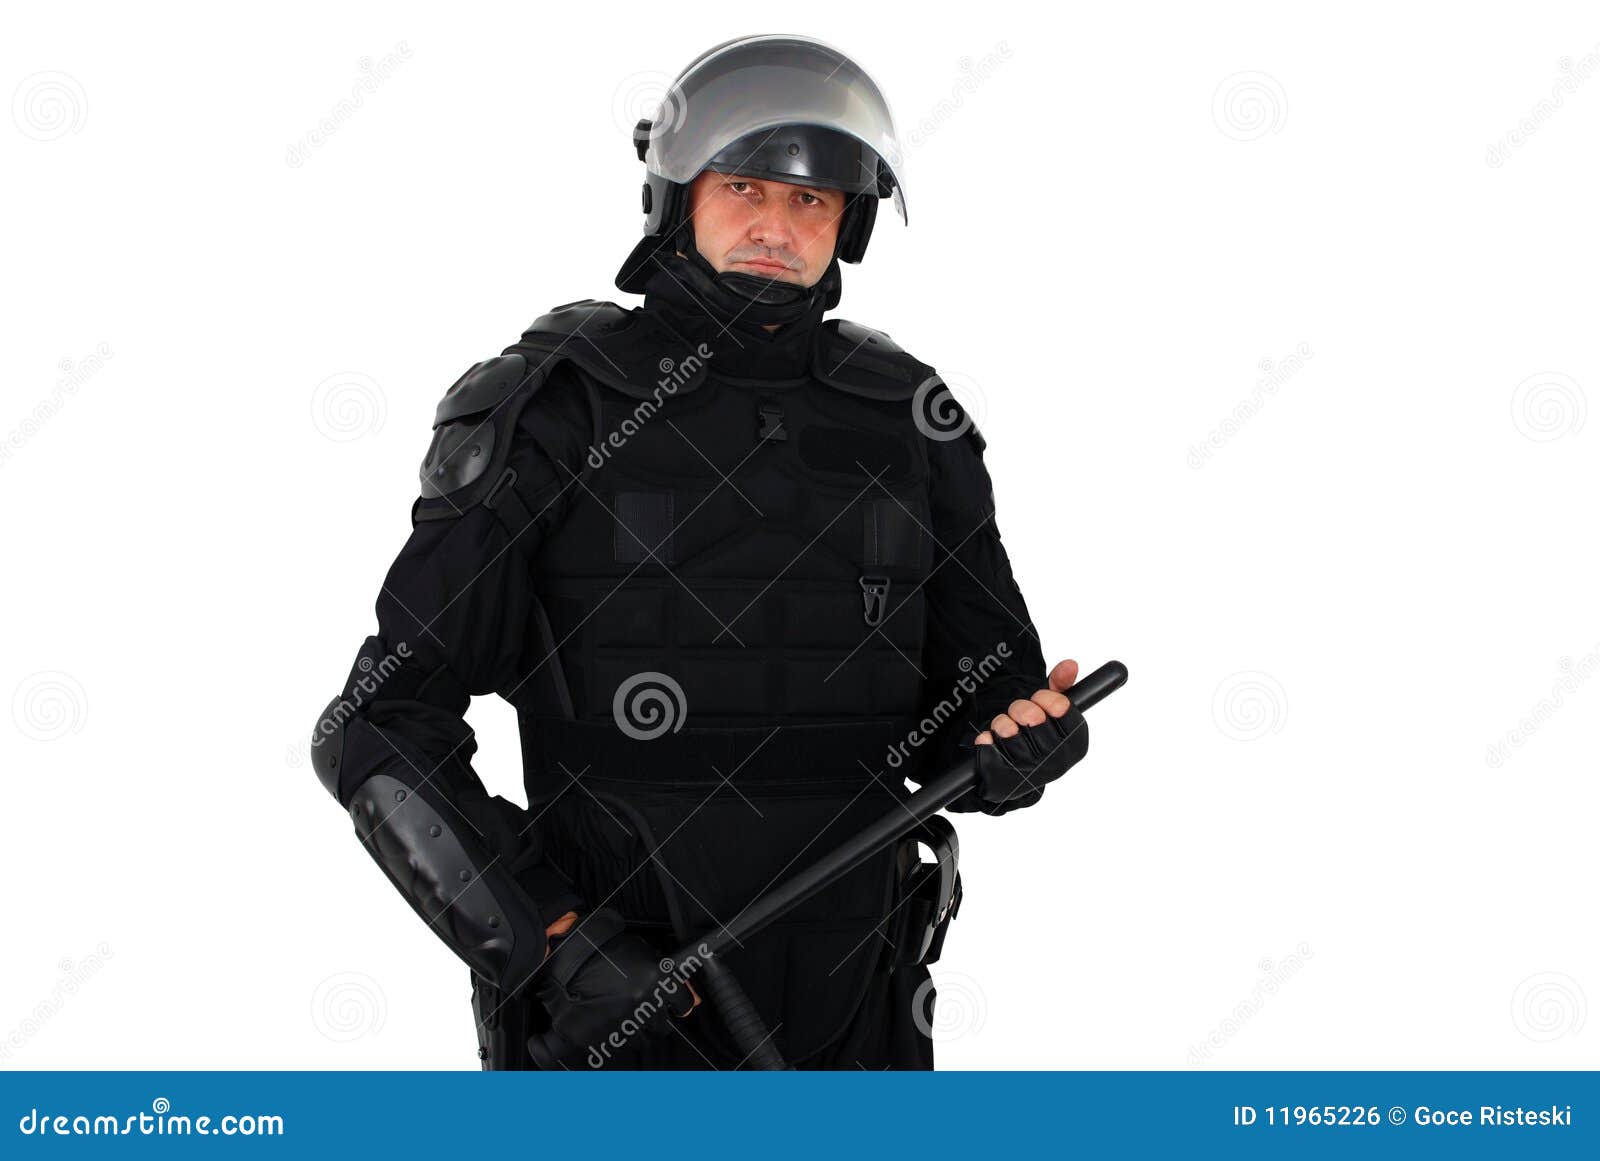 riot policeman